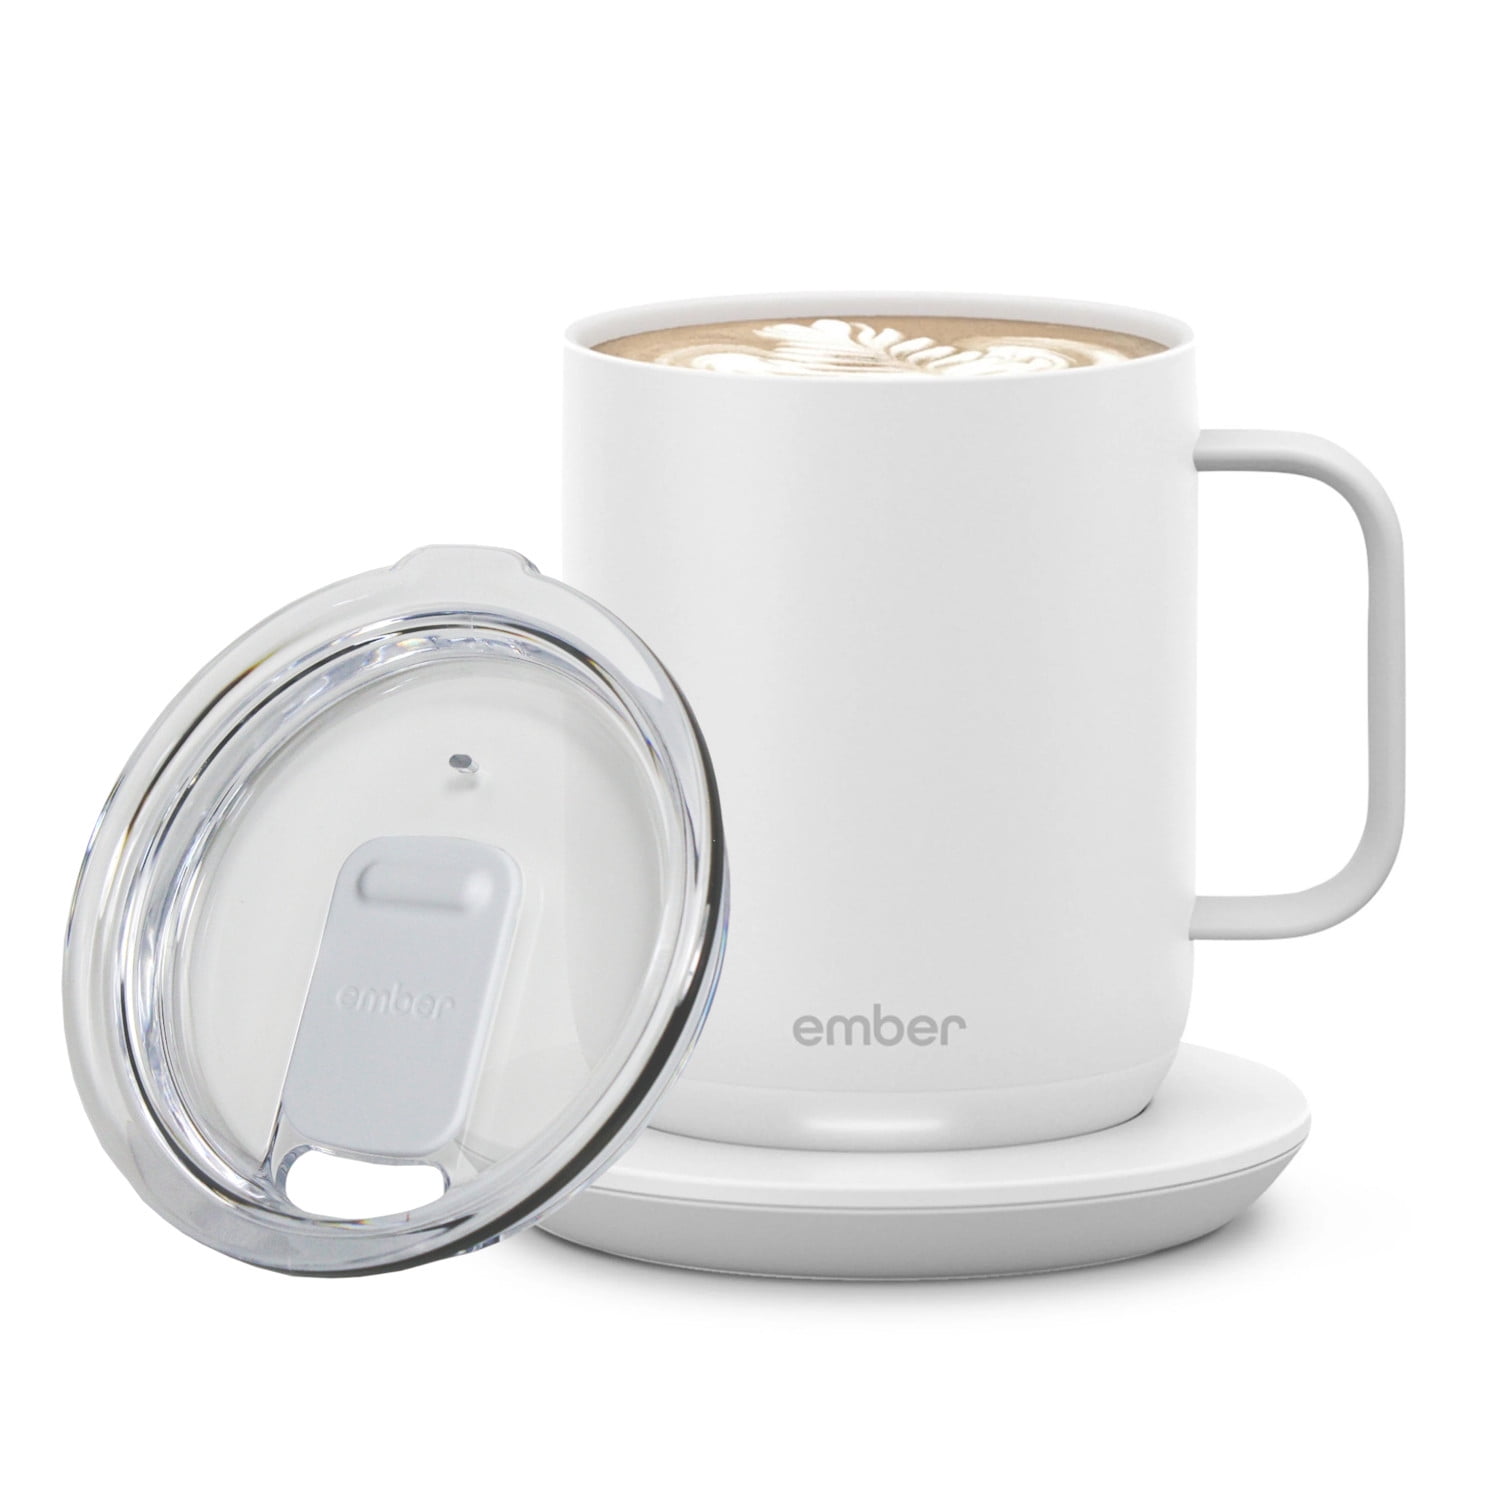 Temperature Control Smart Mug 2 with Lid, Heating Coffee Mug 10 oz, LED  Display, 90 Min Battery Life - App& Controlled Heated C - AliExpress